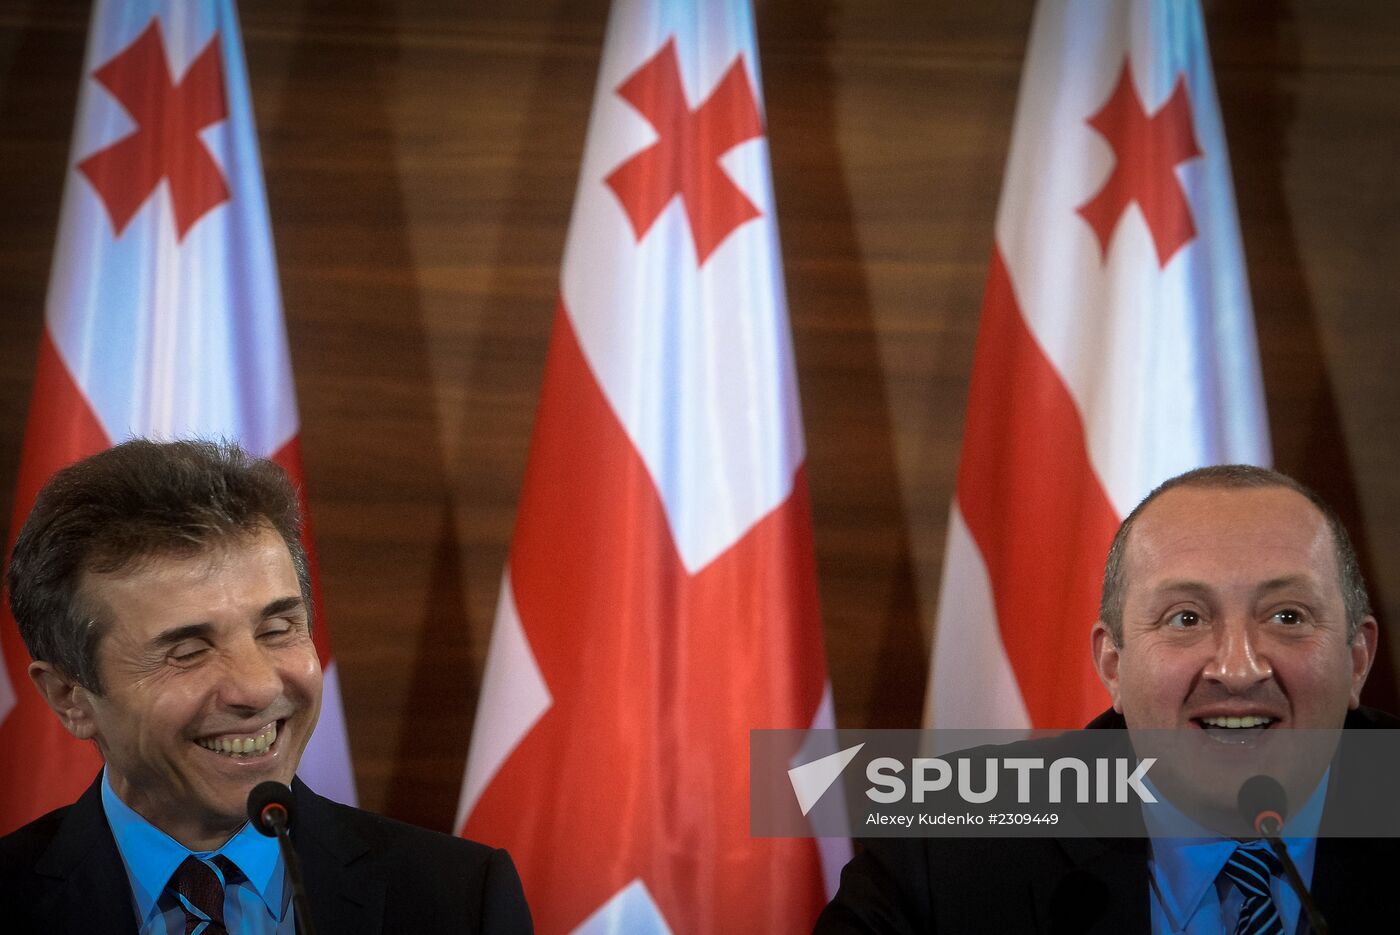 News conference by Bidzina Ivanishvili and Giorgi Margvelashvili